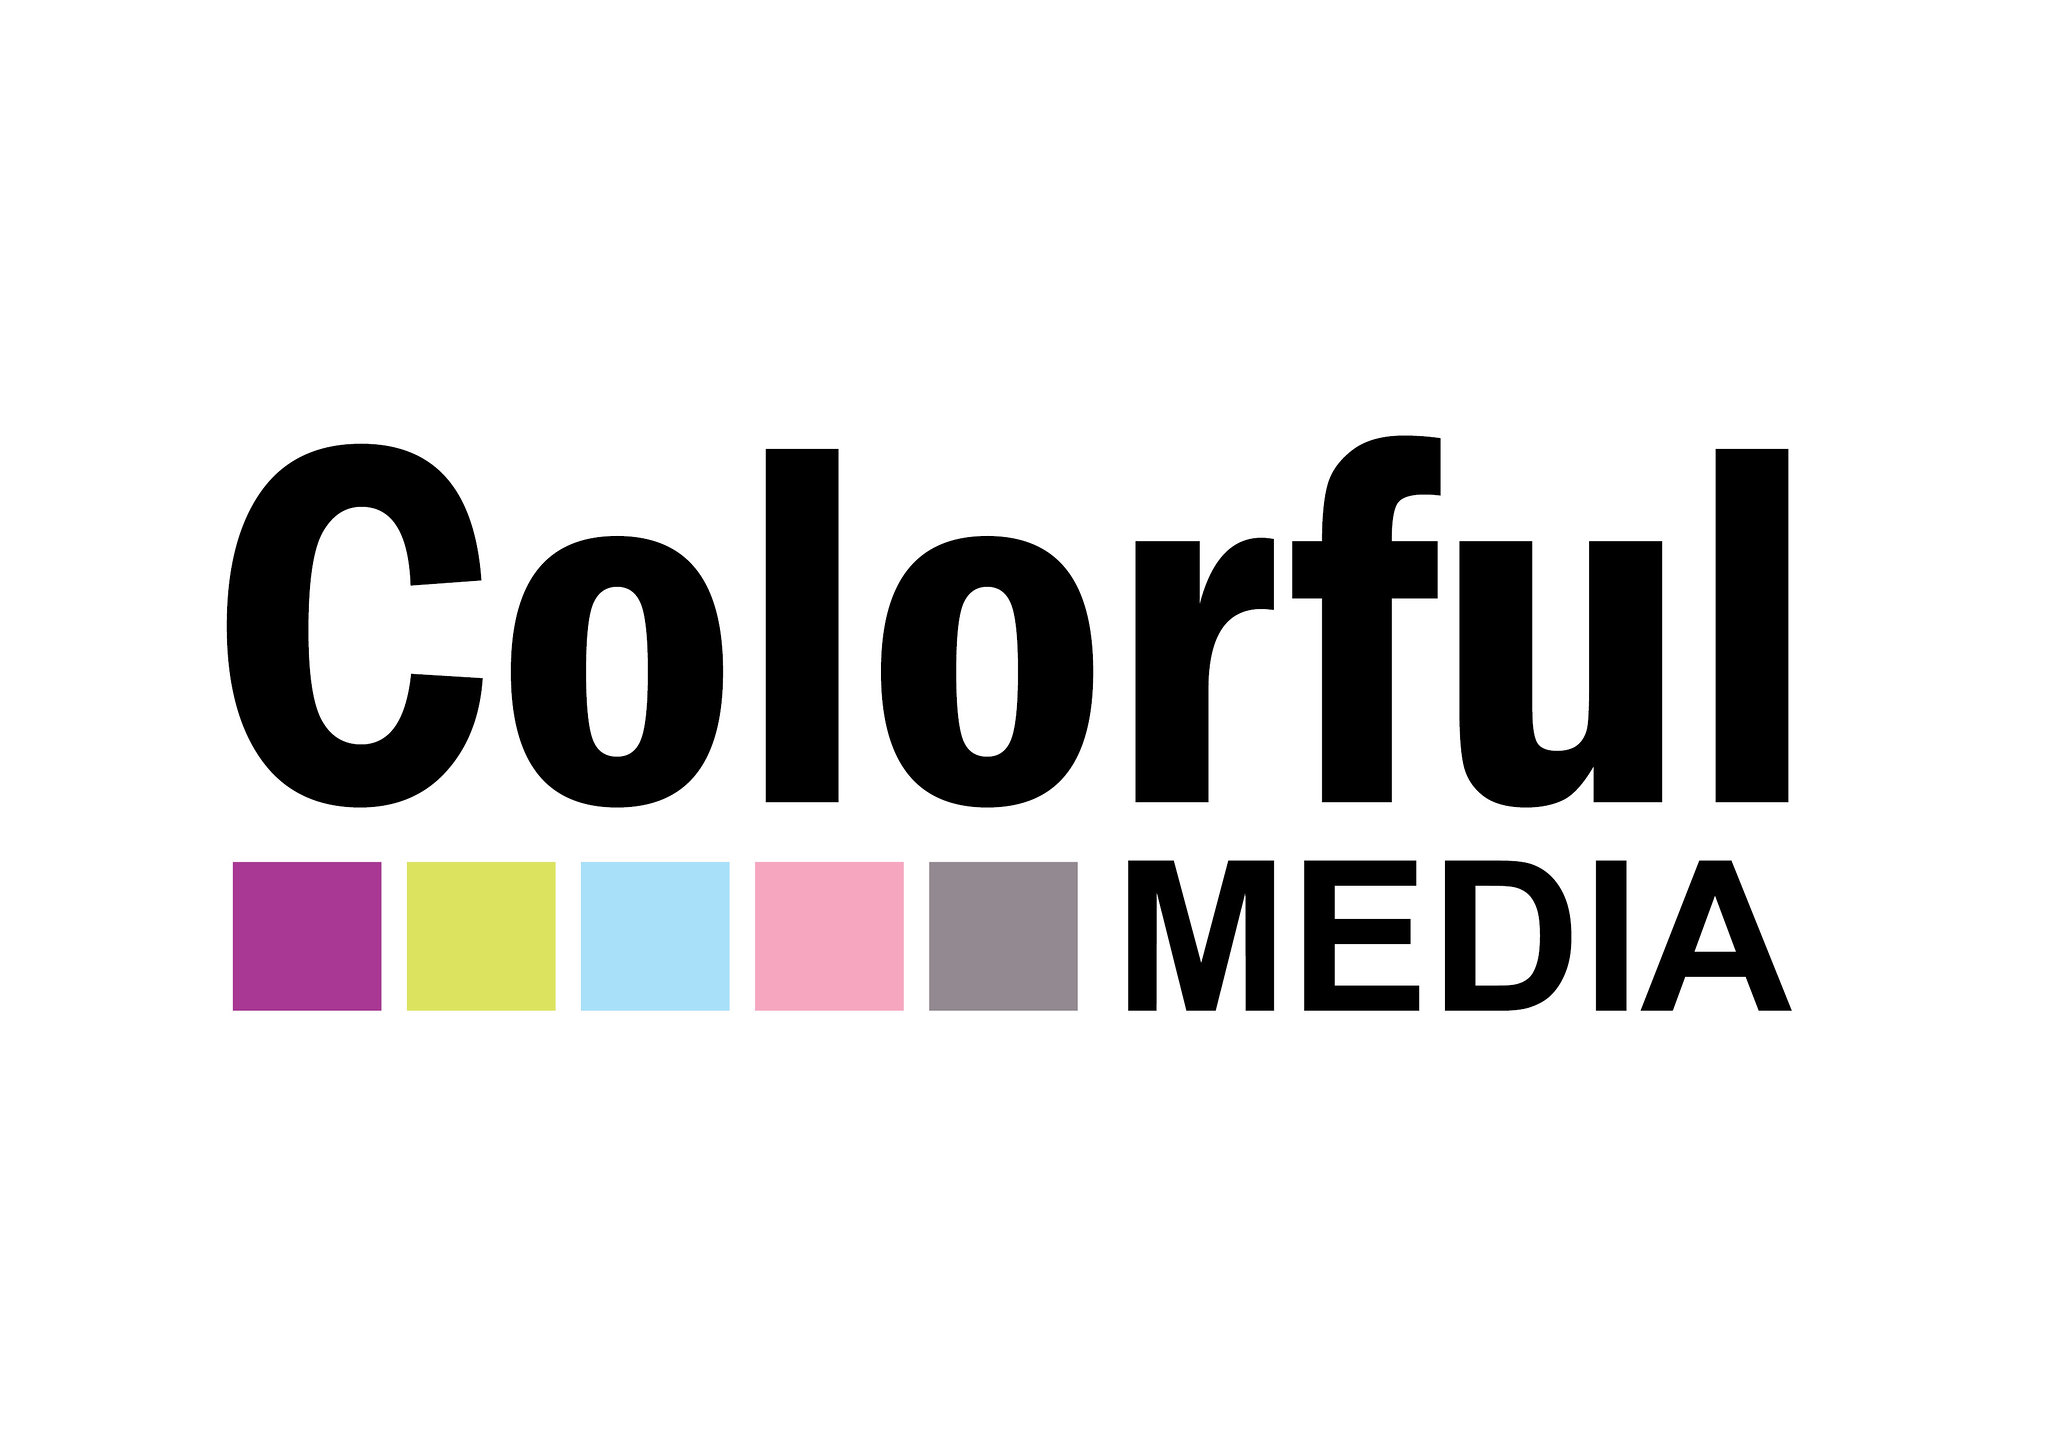 Colorful Media